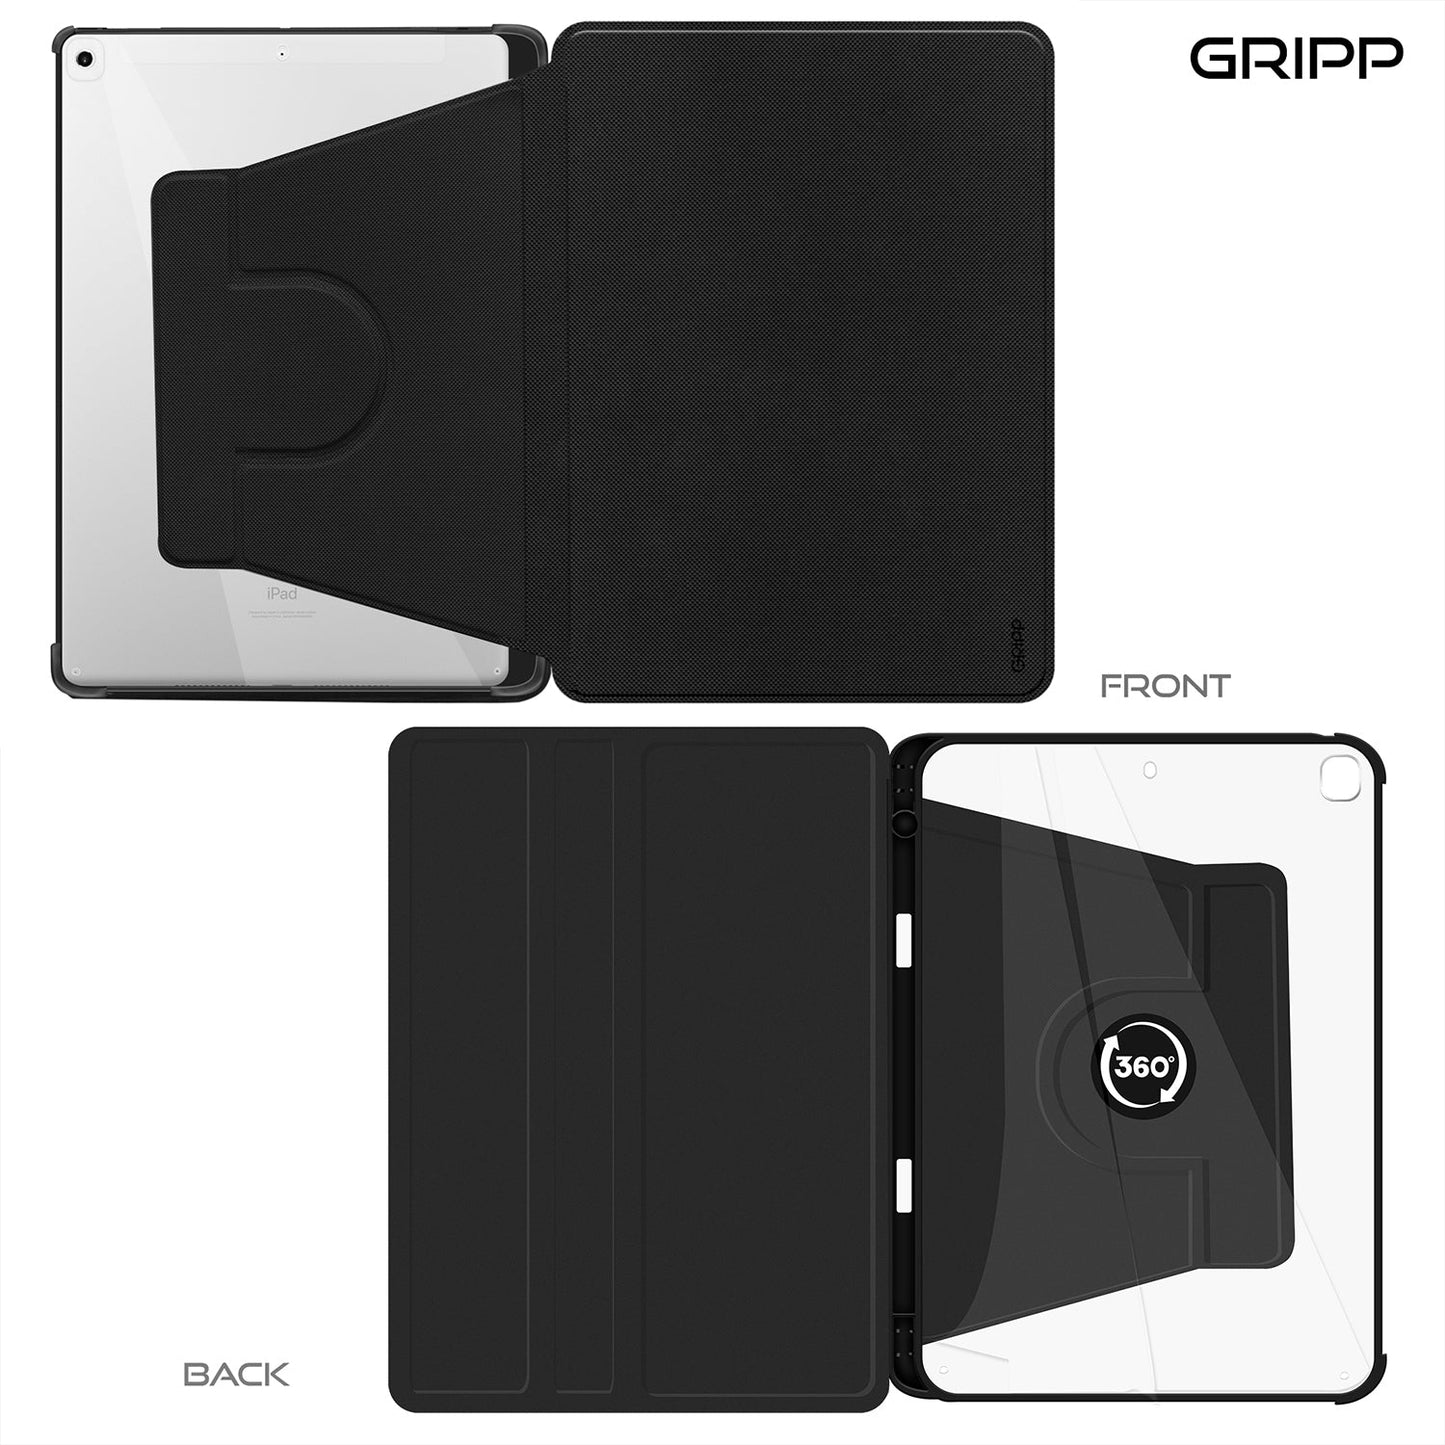 Gripp Revolv Case For Apple Ipad 10.2" - Black